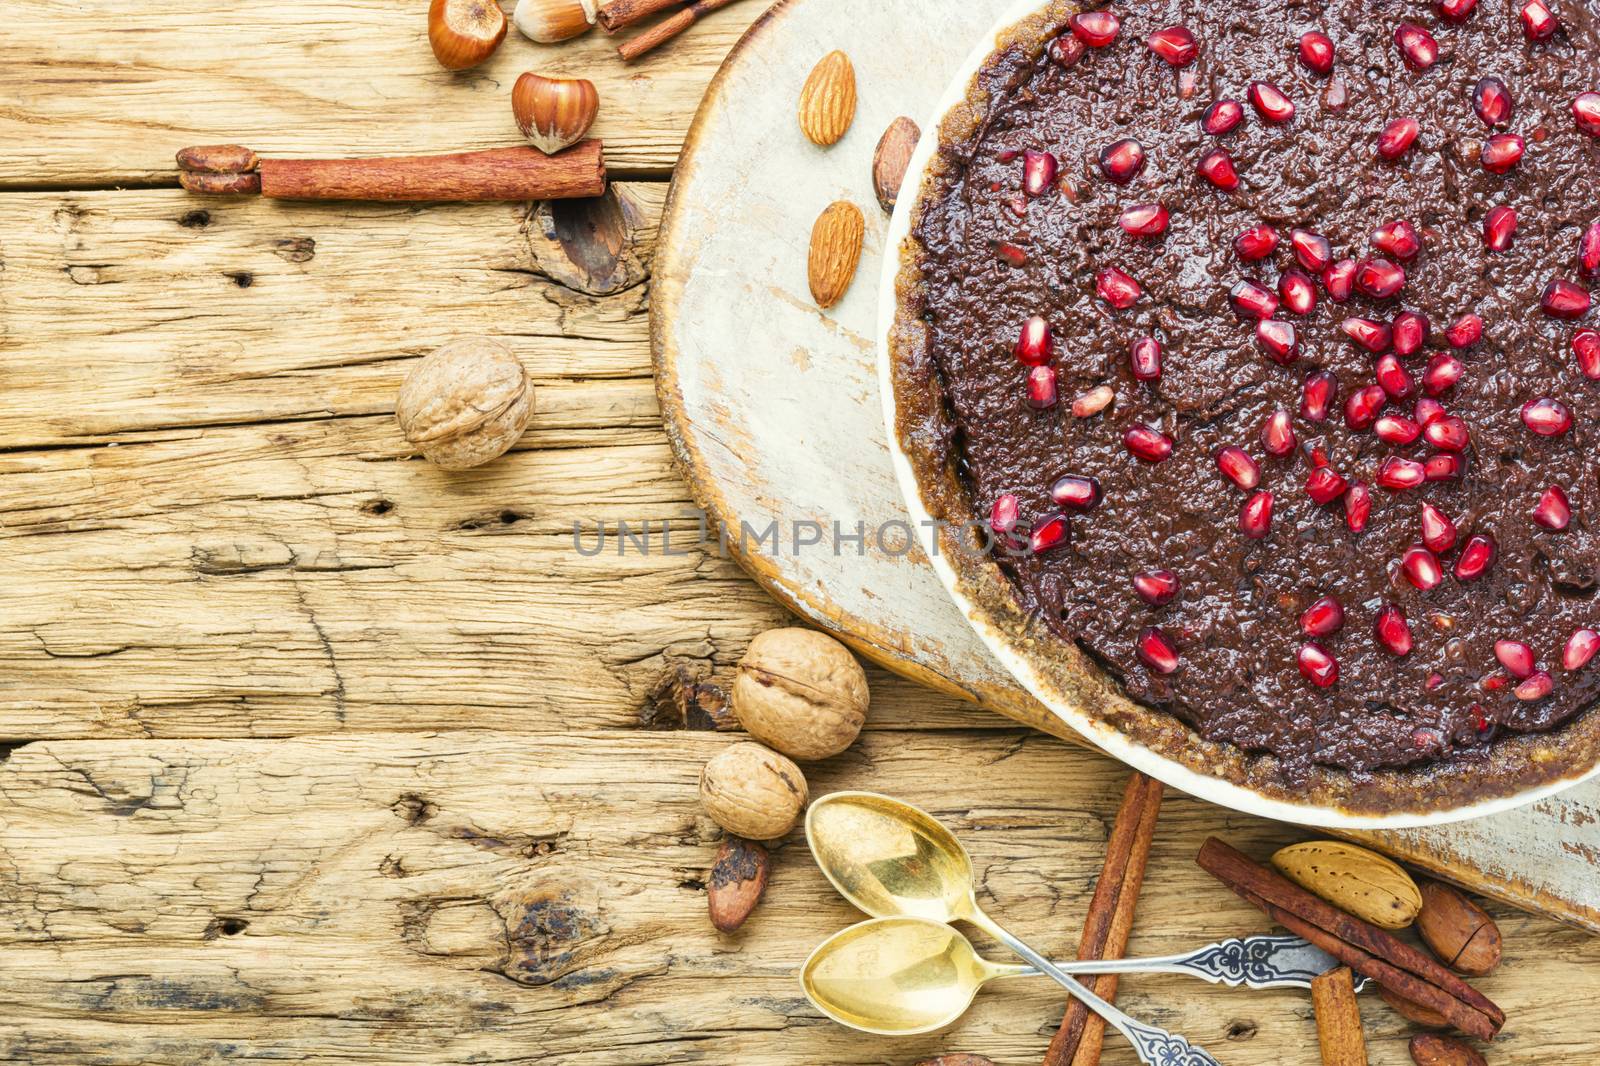 Chocolate cake with pomegranate by LMykola